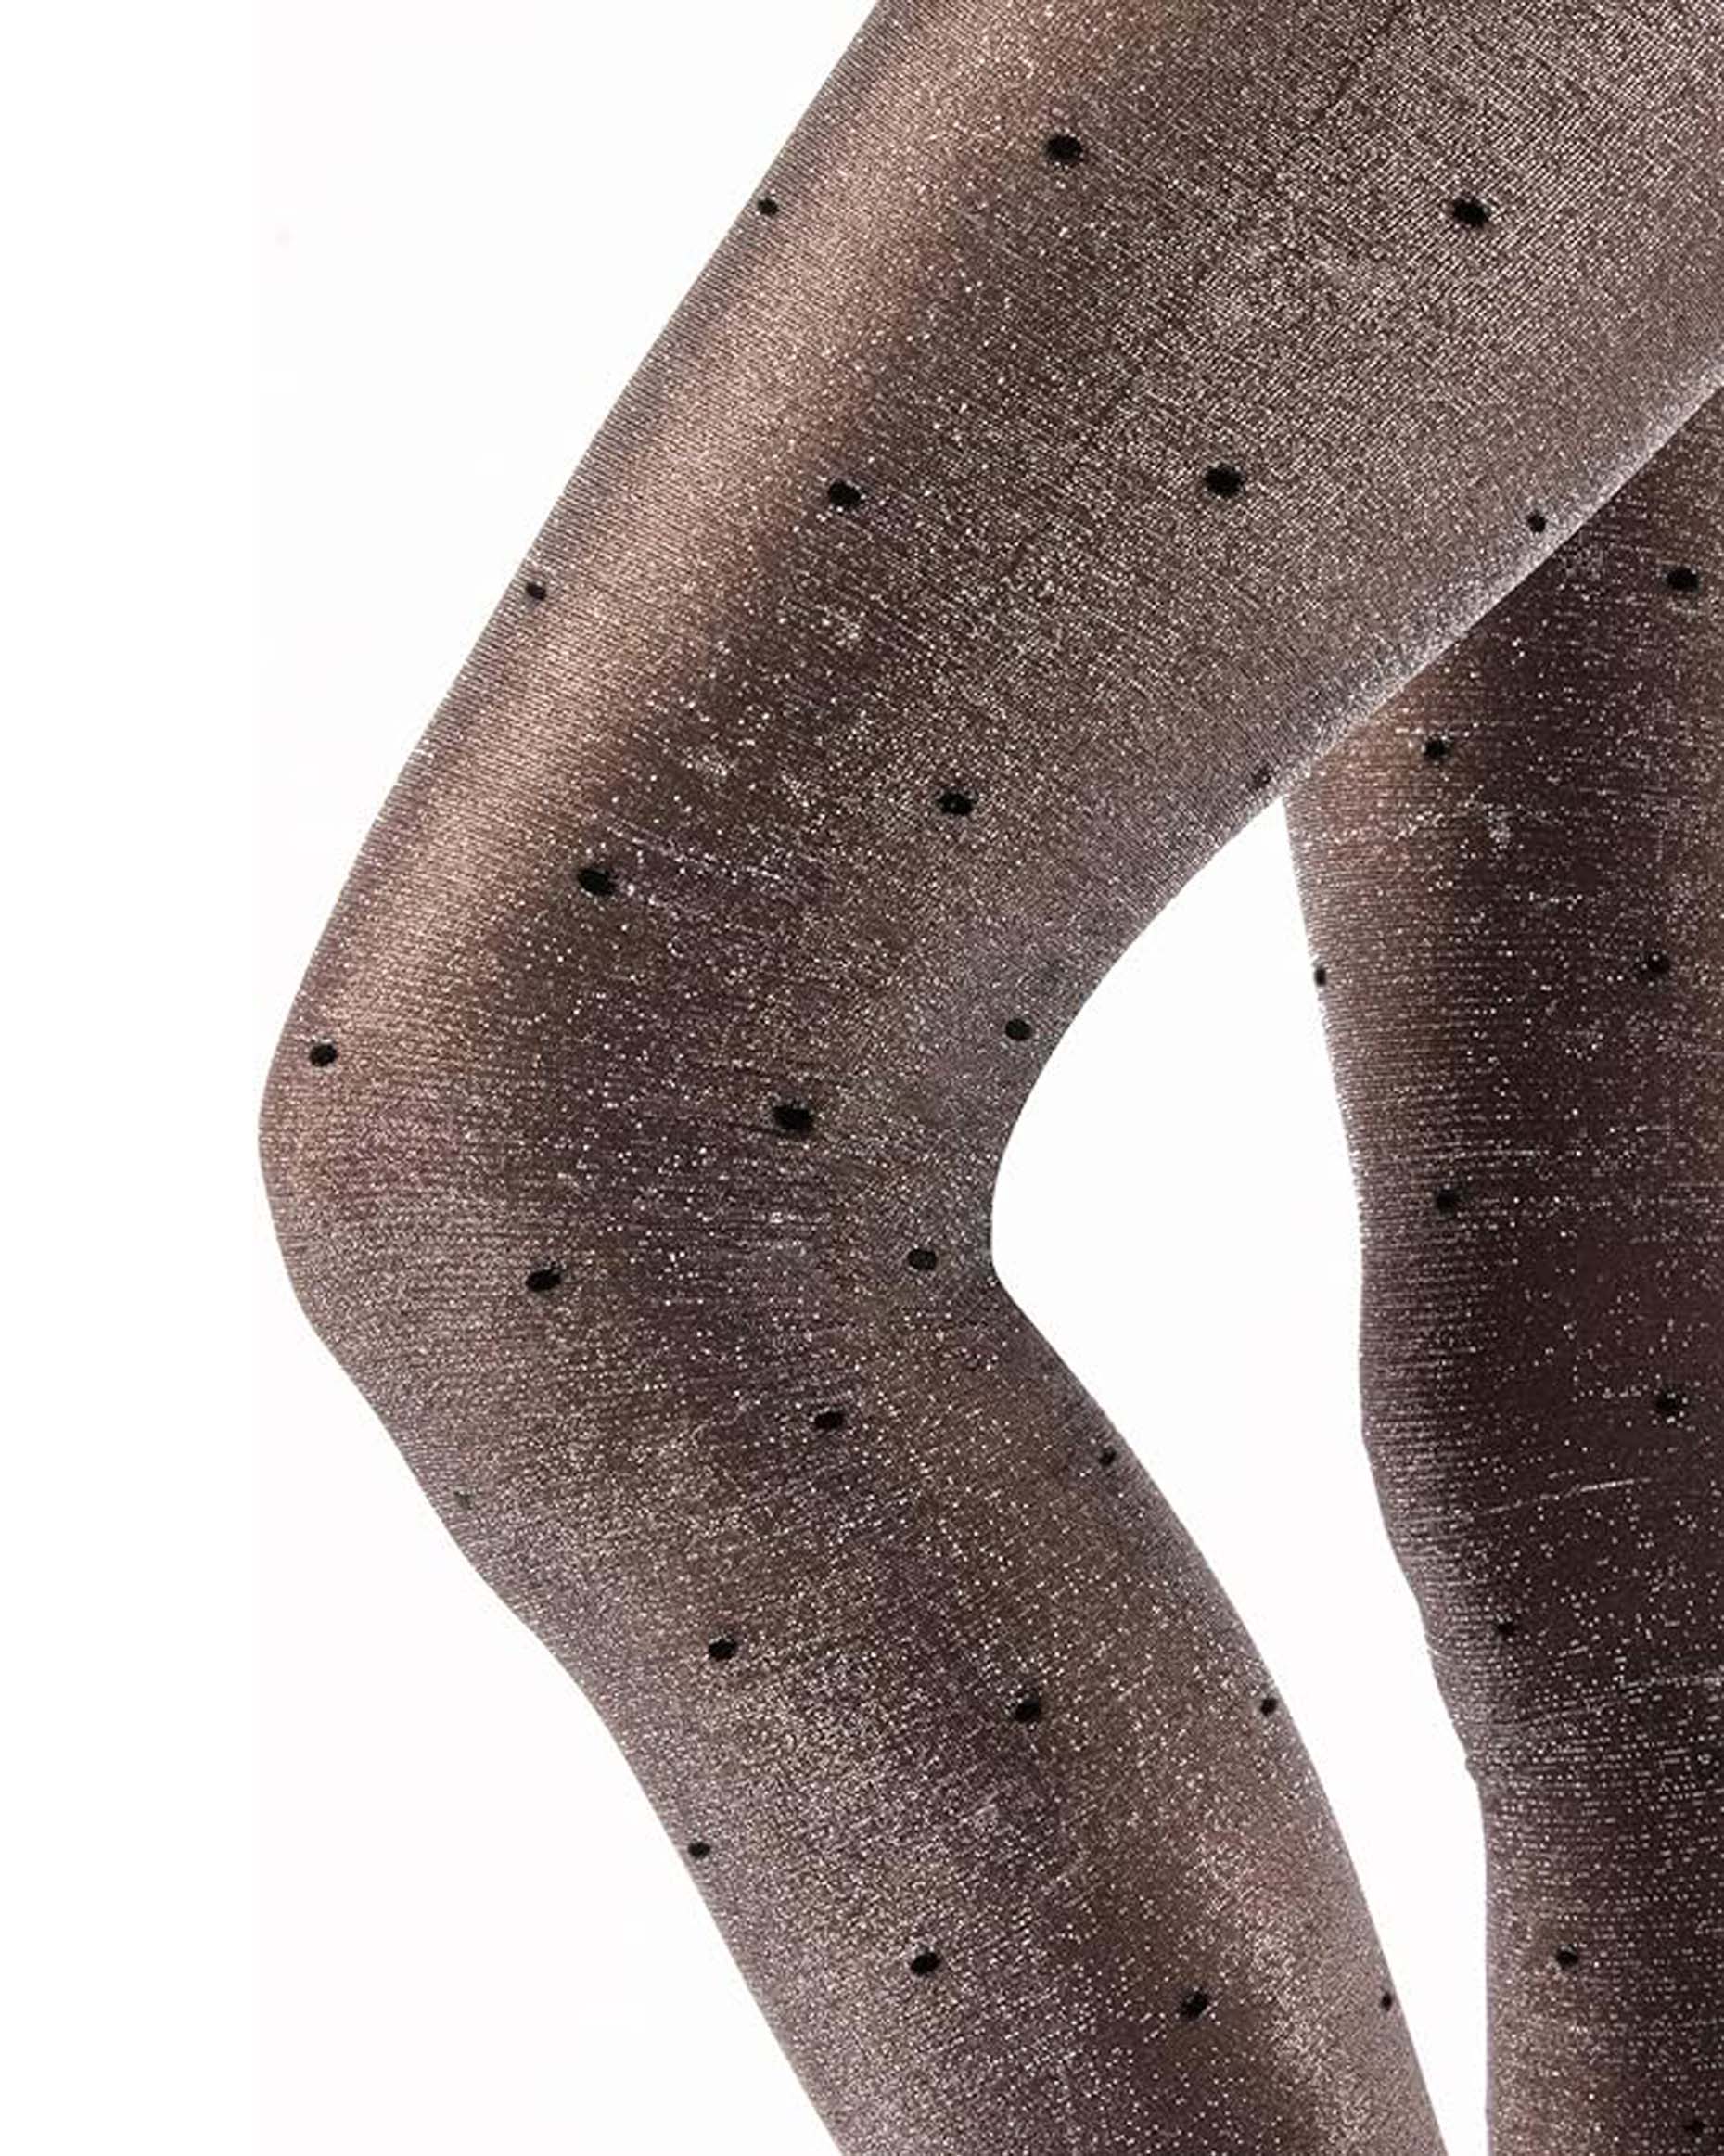 Calzitaly Glitter Polka Dot Tights - Sheer black fashion tights with sparkly silver lamé, black polka dot pattern.